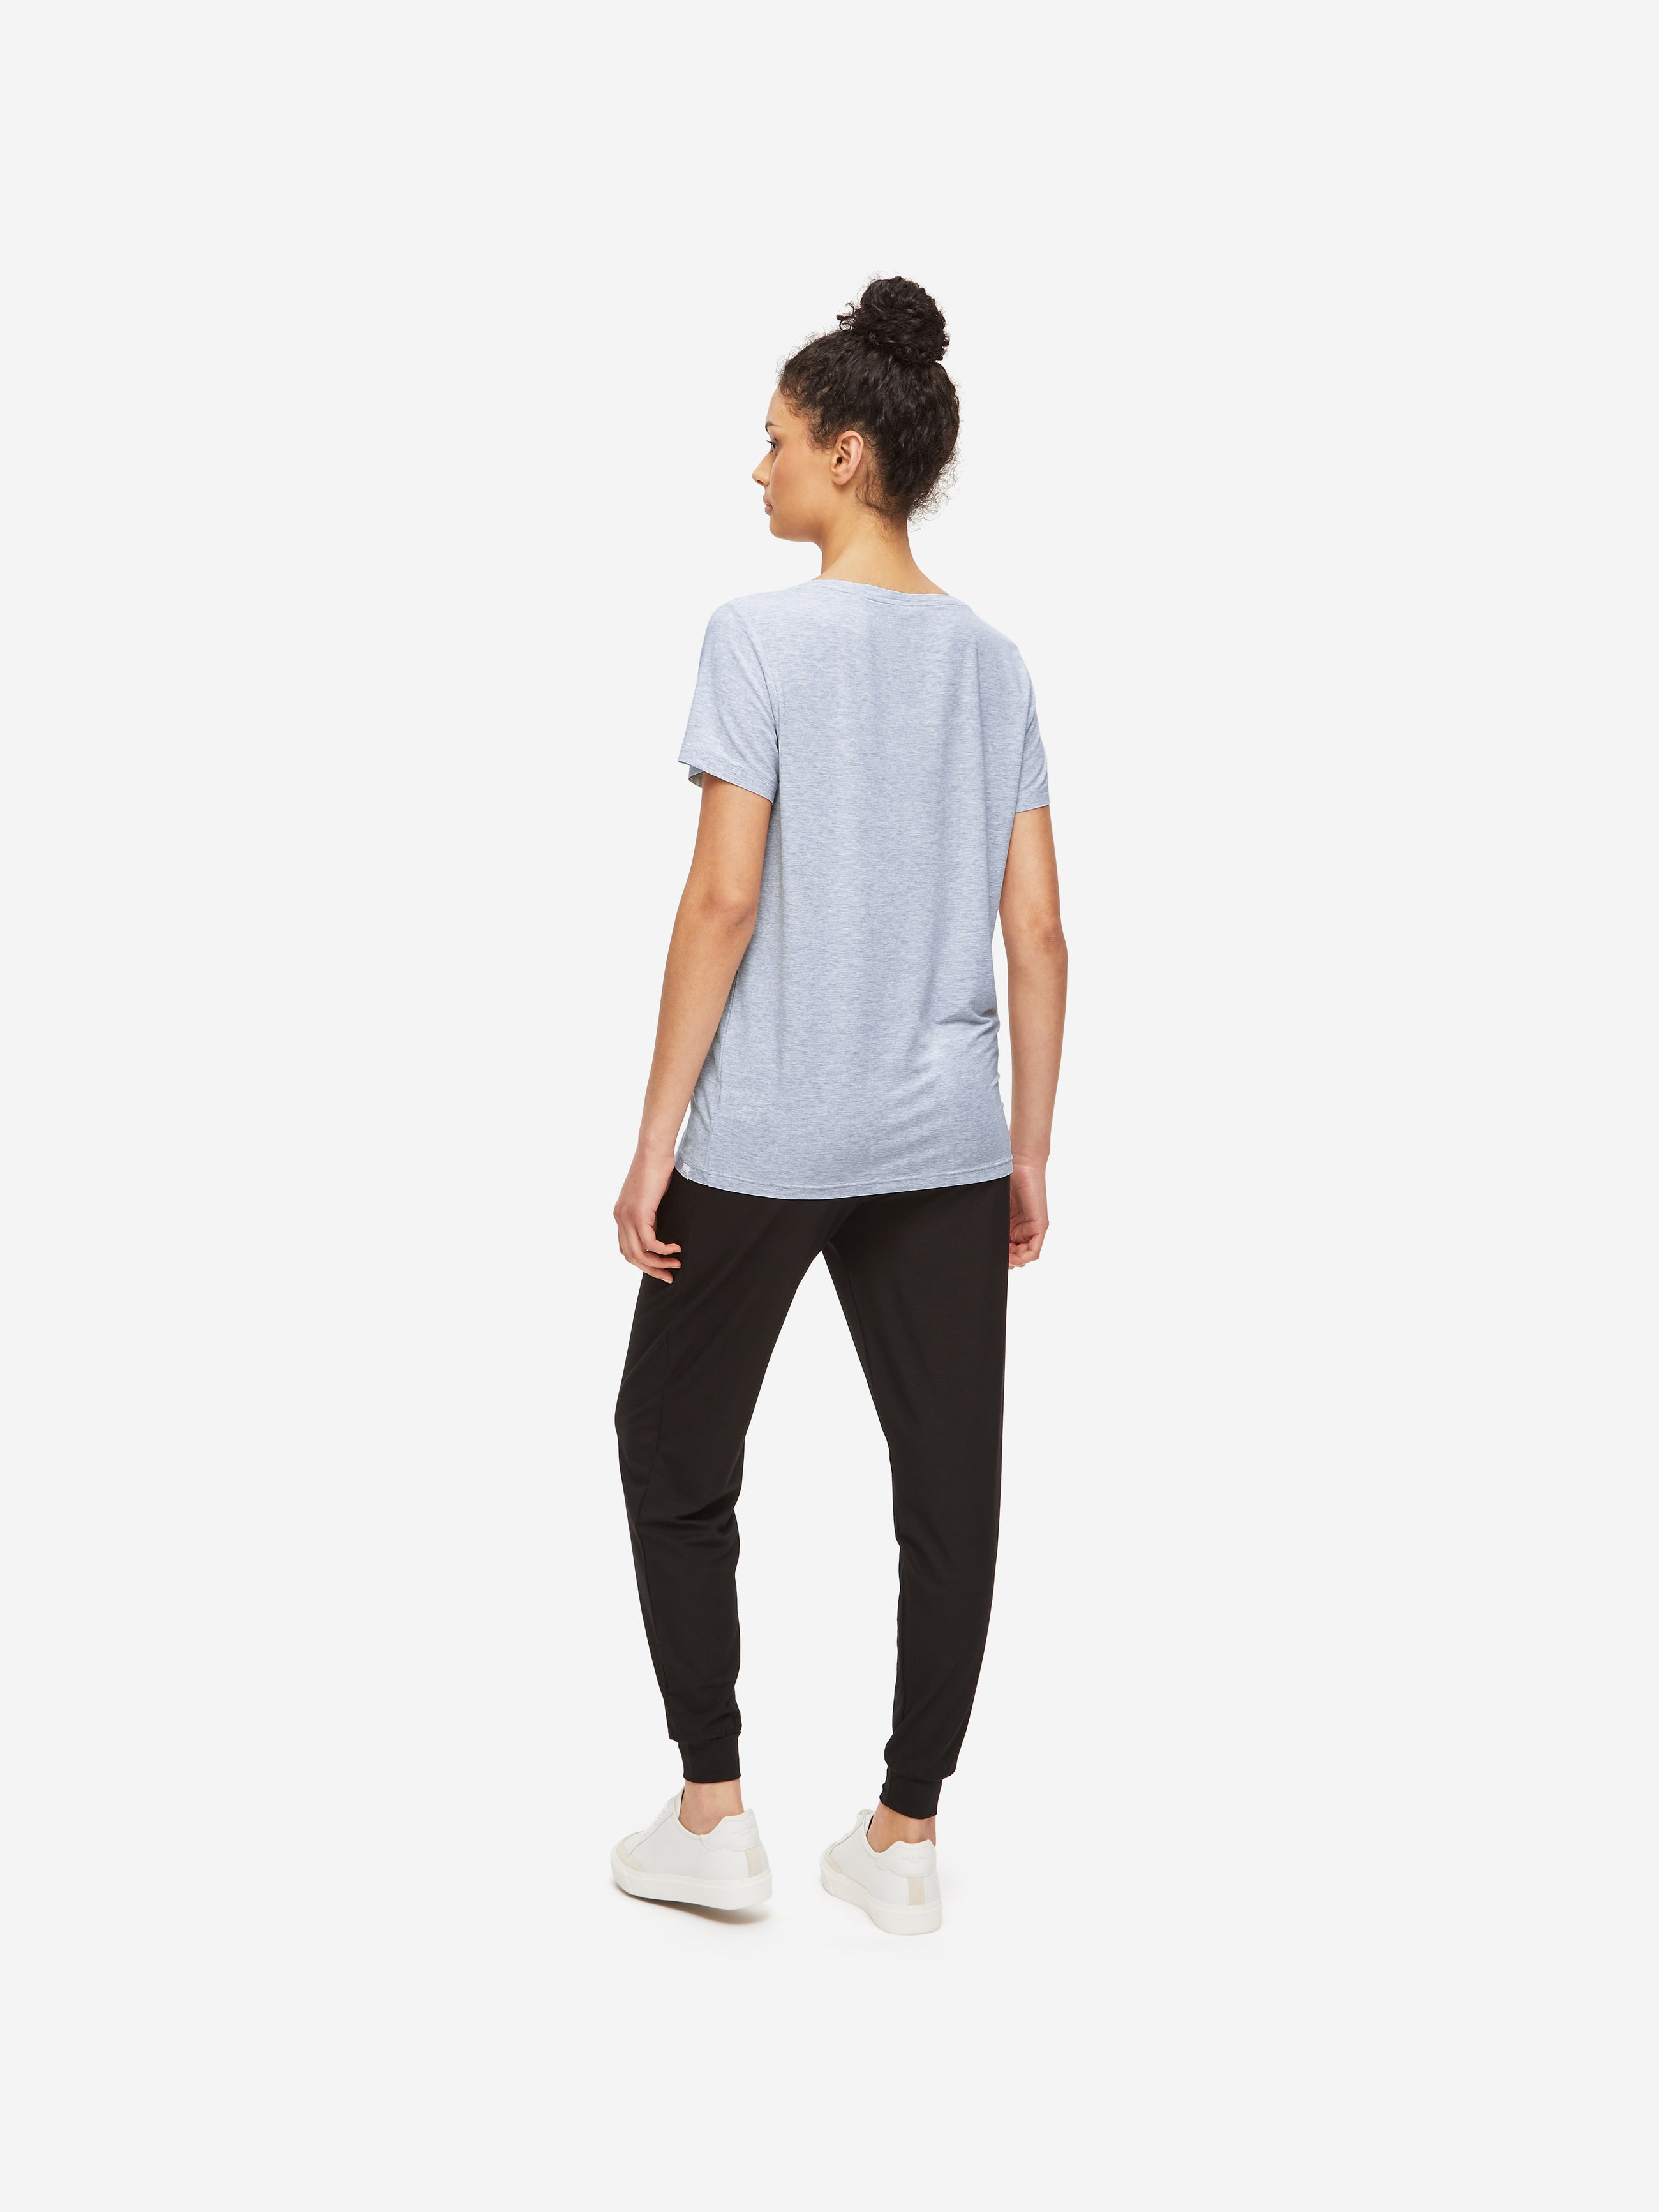 Women's T-Shirt Ethan Micro Modal Stretch Light Blue Heather